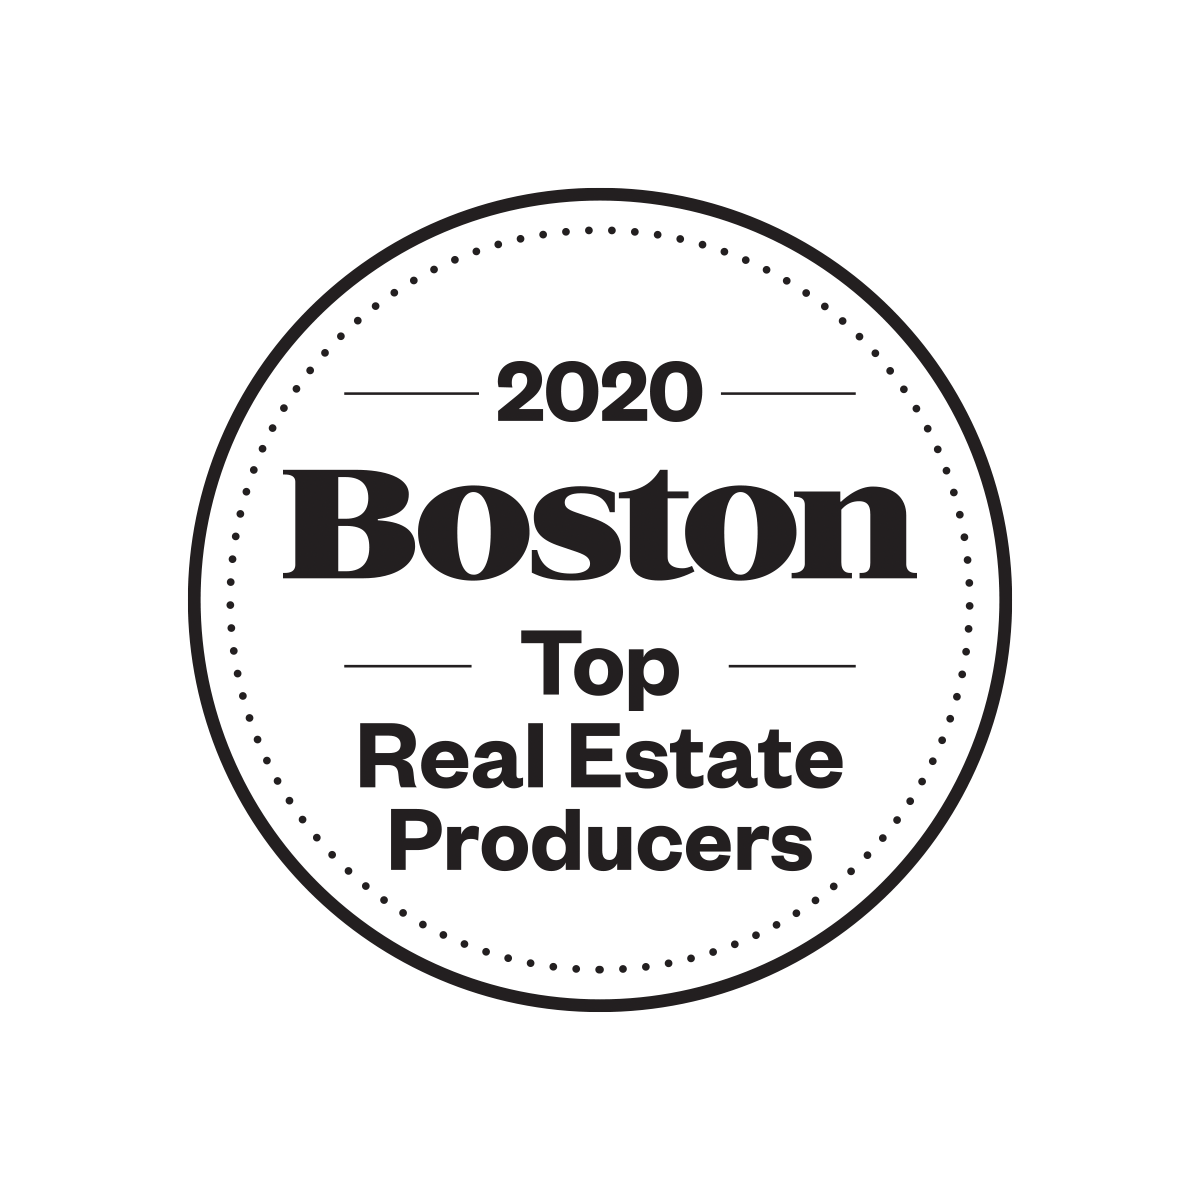 Boston Magazine Top Real Estate Producers Window Decals by NewsKeepsake